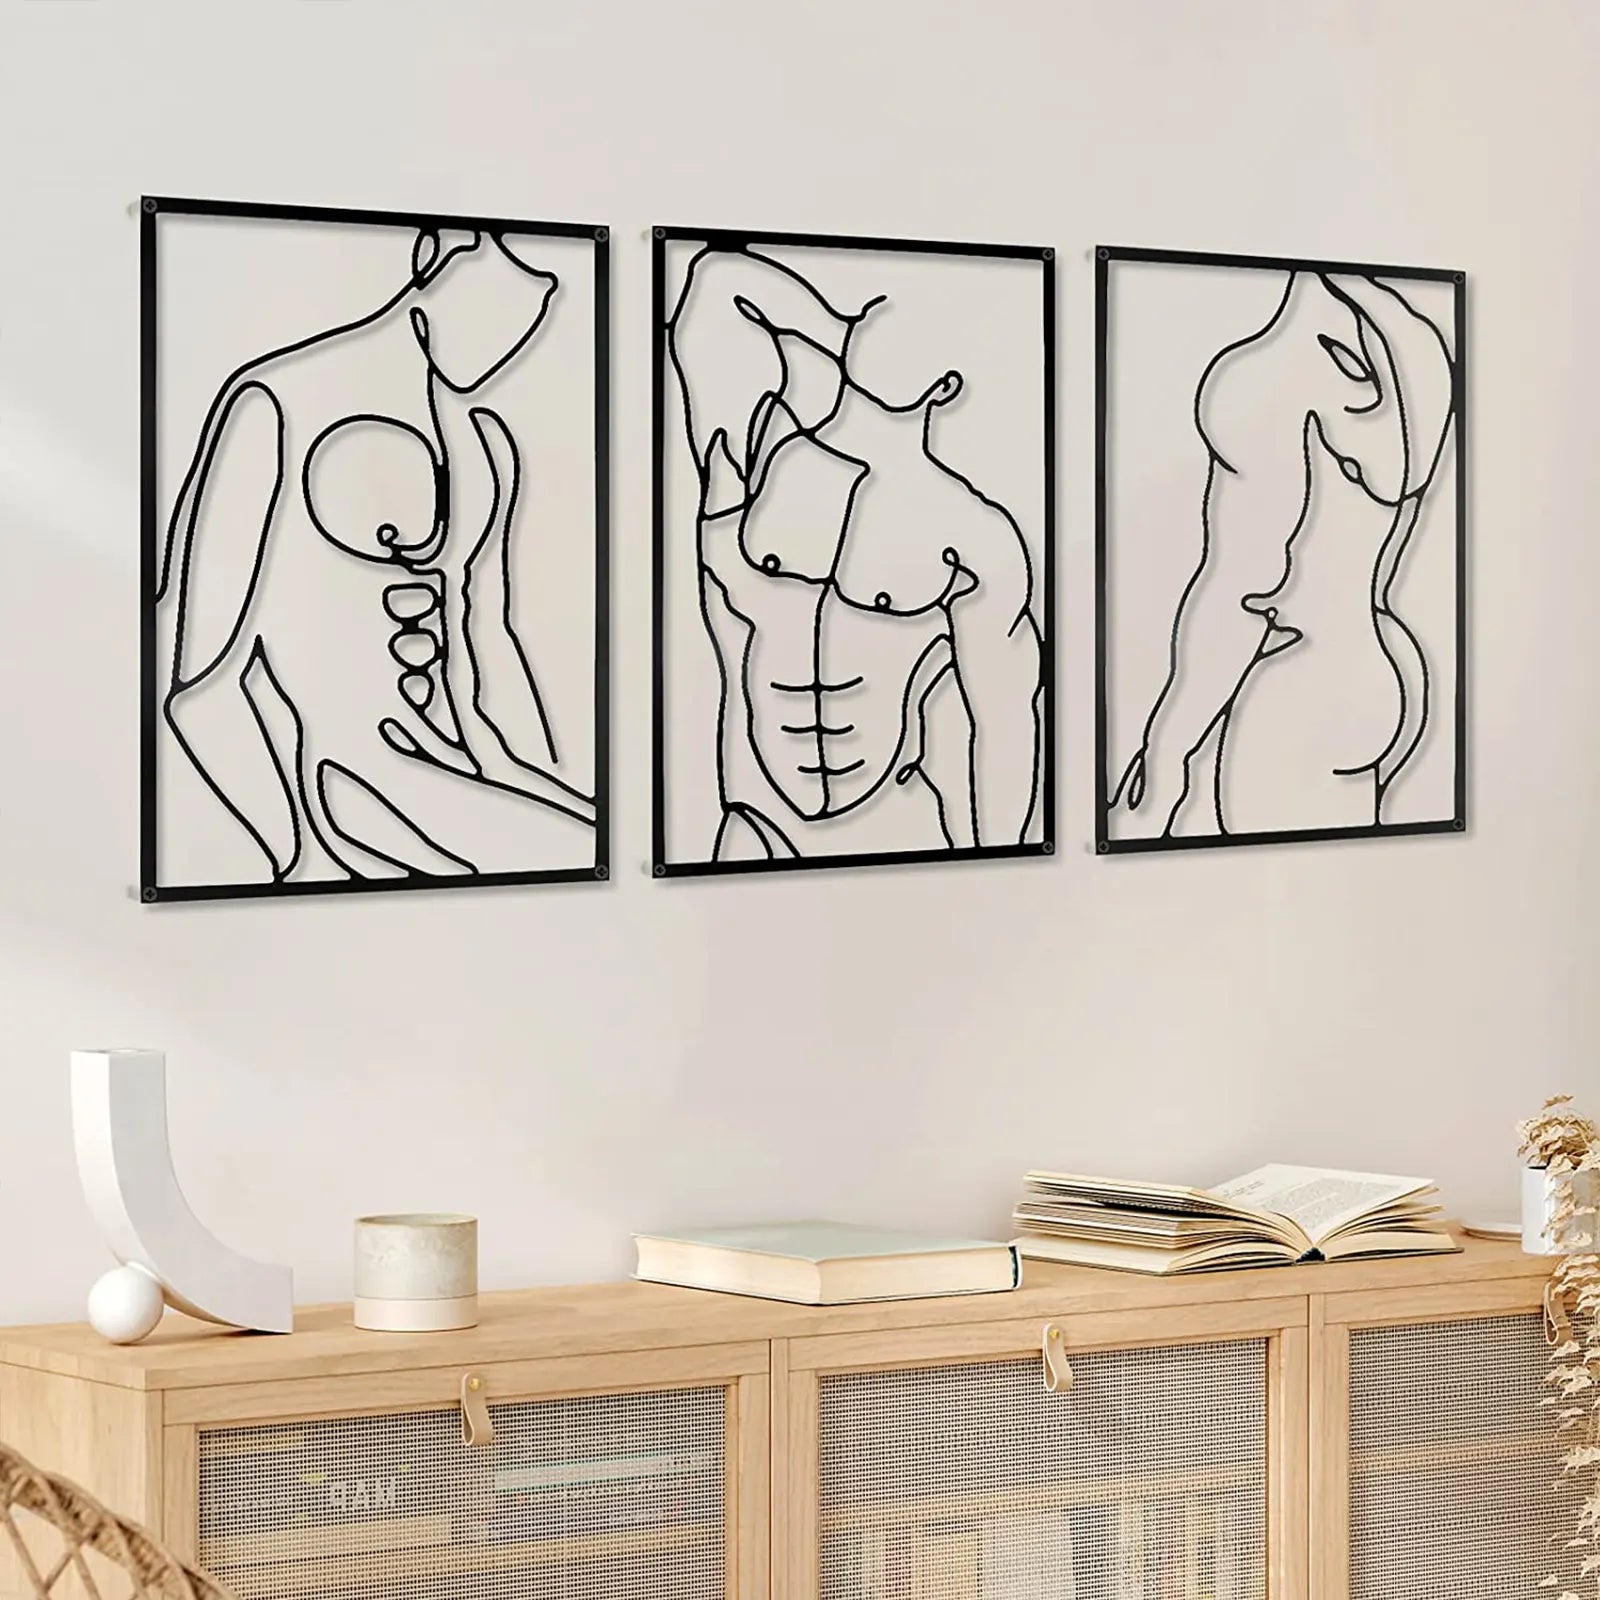 3 Metal Wall Decor Set - Thicker Modern Minimalist Abstract Men Shape Line Wall Hanging Sculptures -Black Metal Wall Art for  Living Room